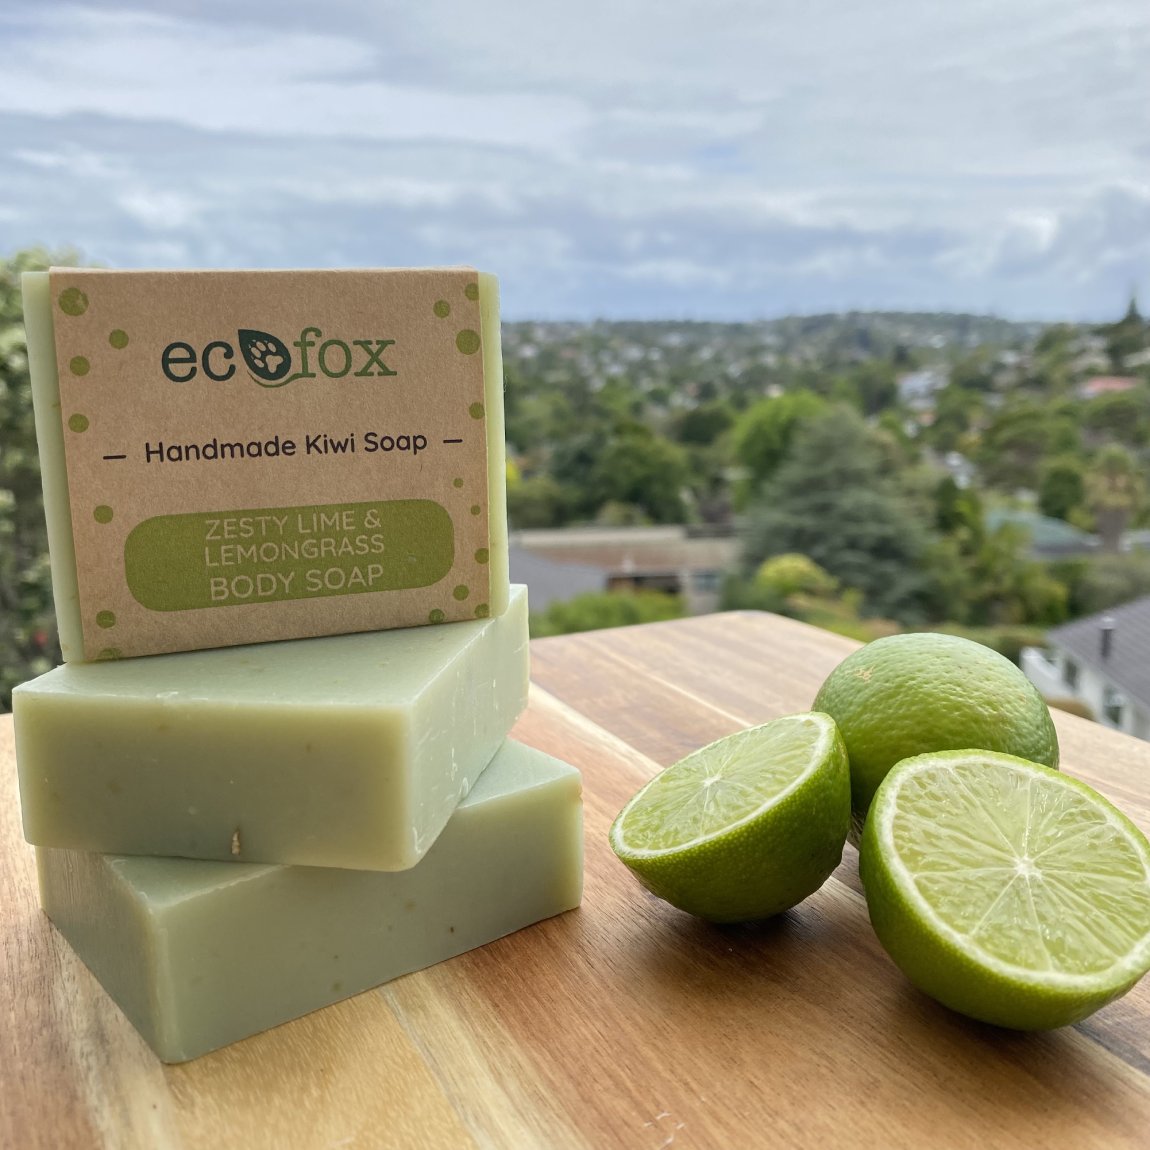 Lemongrass & Lime Body Handmade Soap Bar. Eco Fox Ltd, handmade soap, natural soap, ecostore